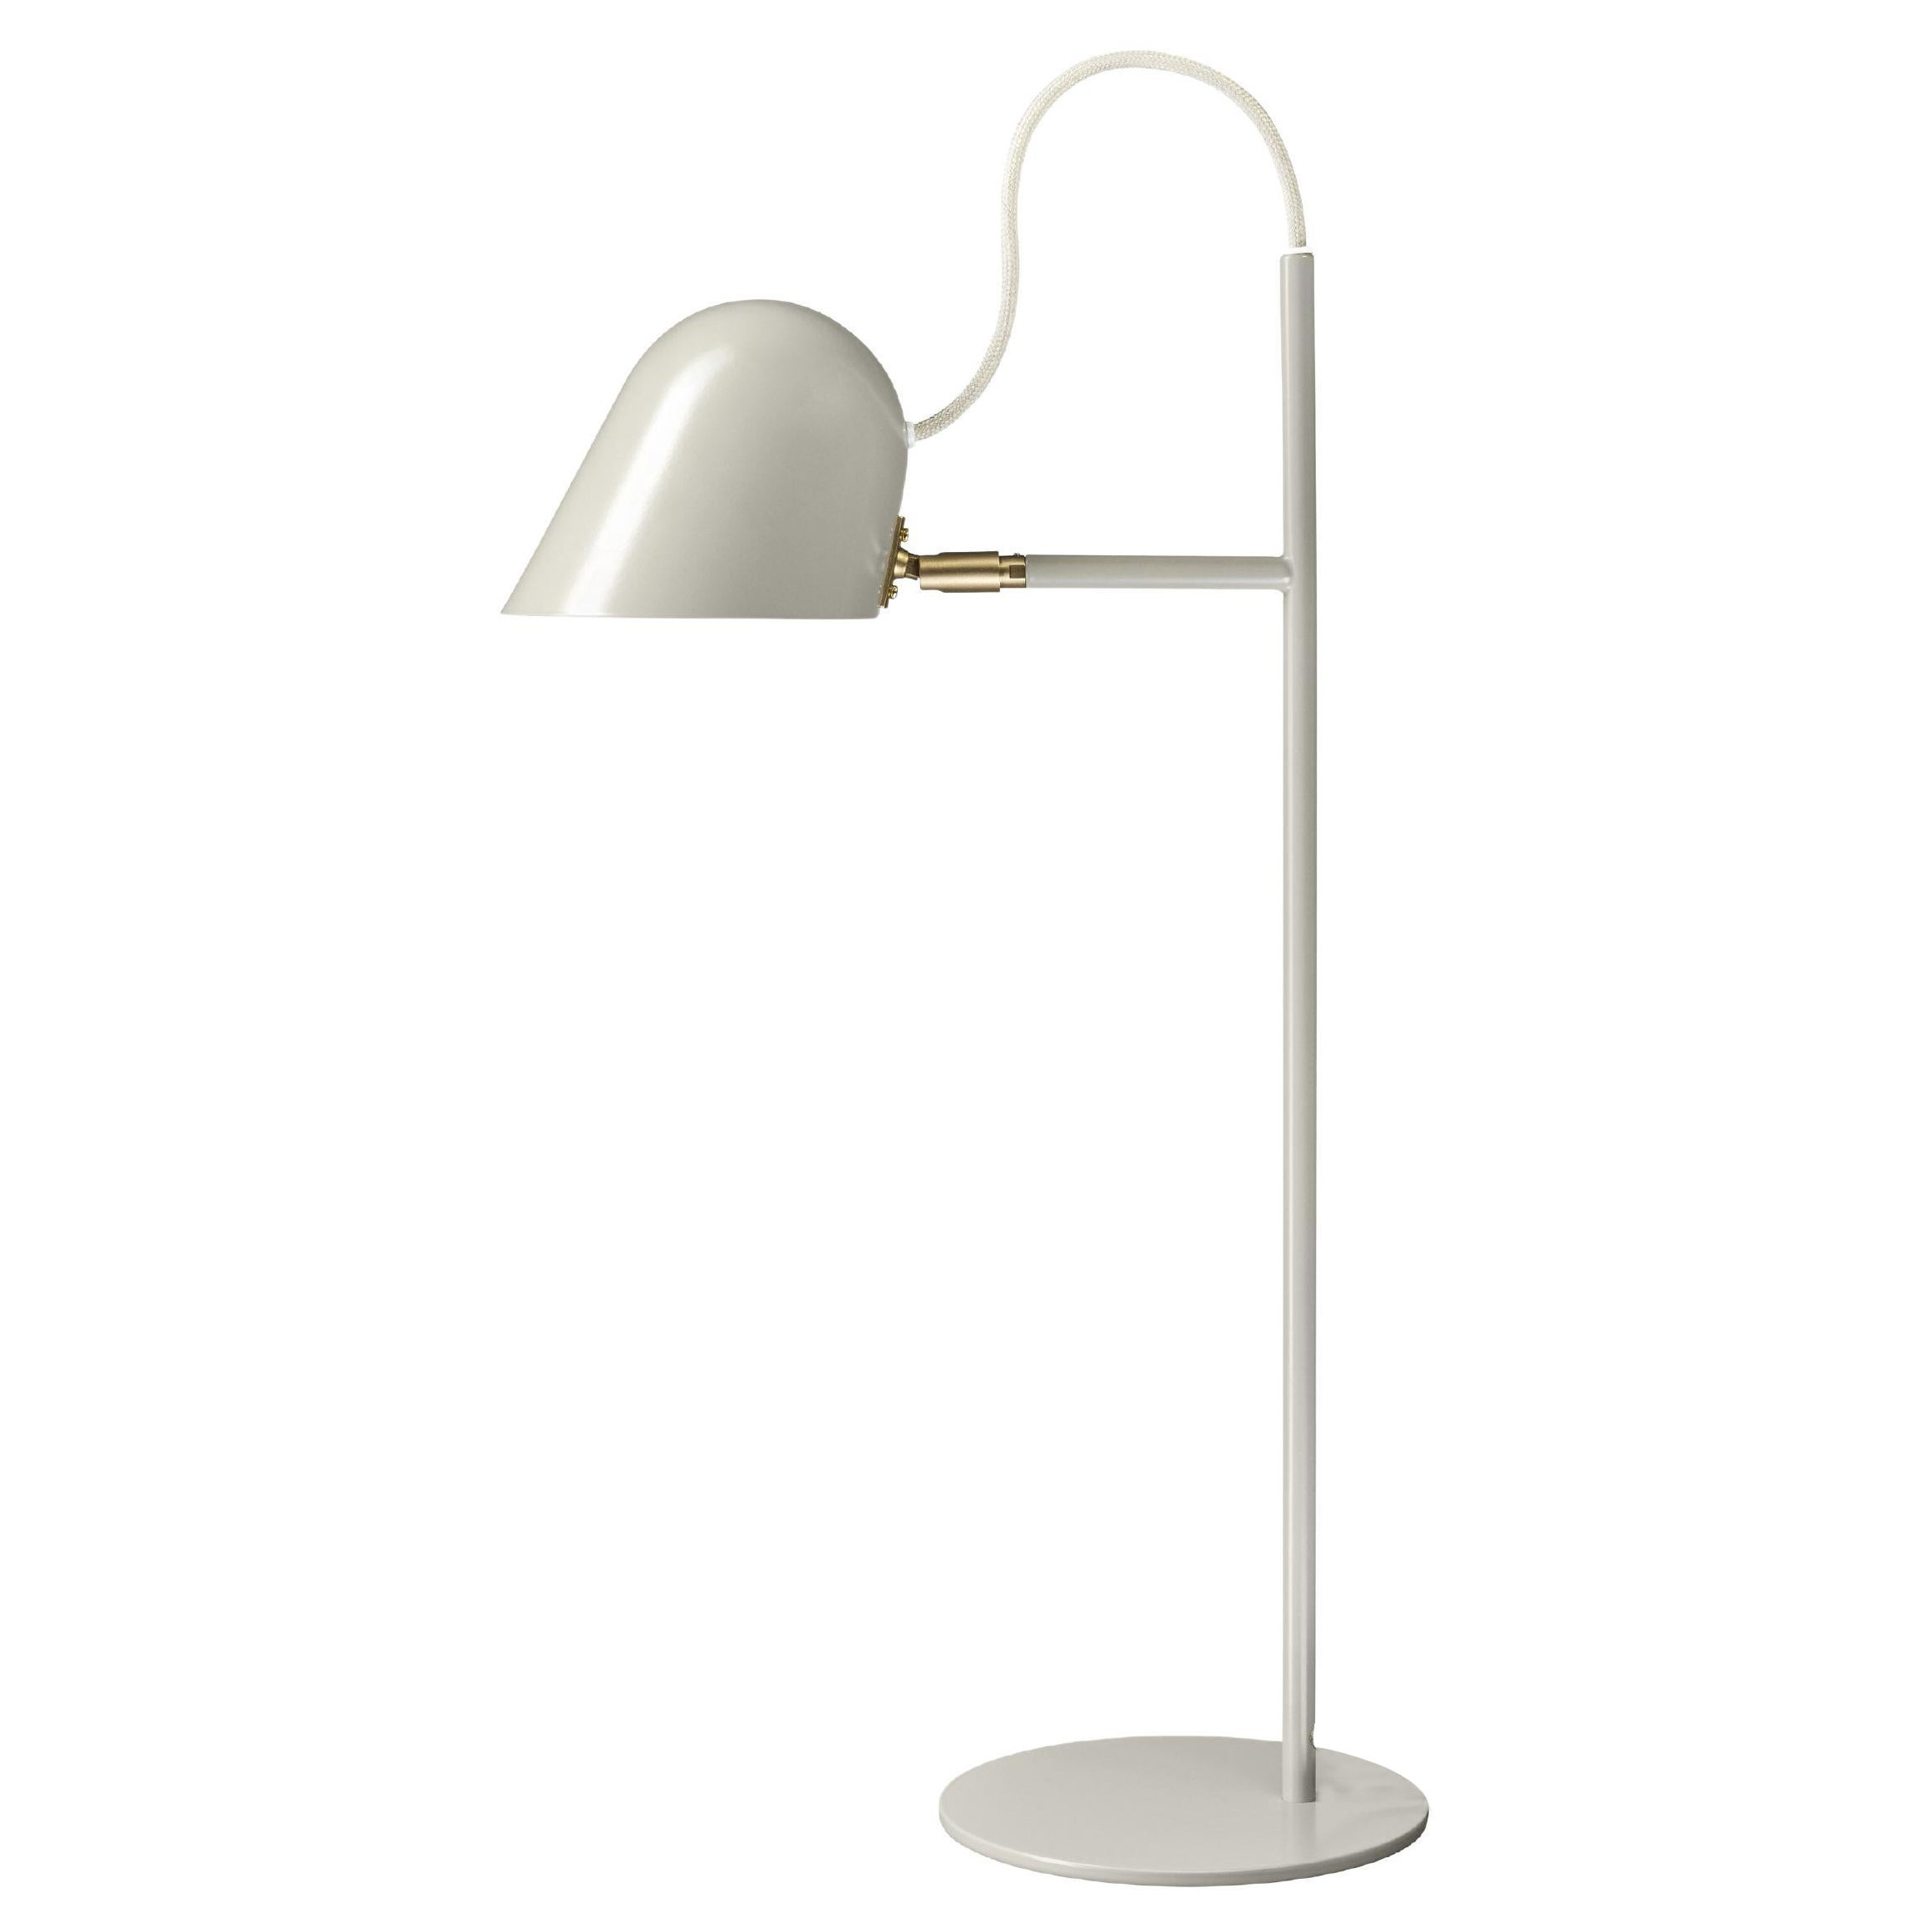 'Streck' Table Lamp by Joel Karlsson for Örsjö in Warm Gray For Sale